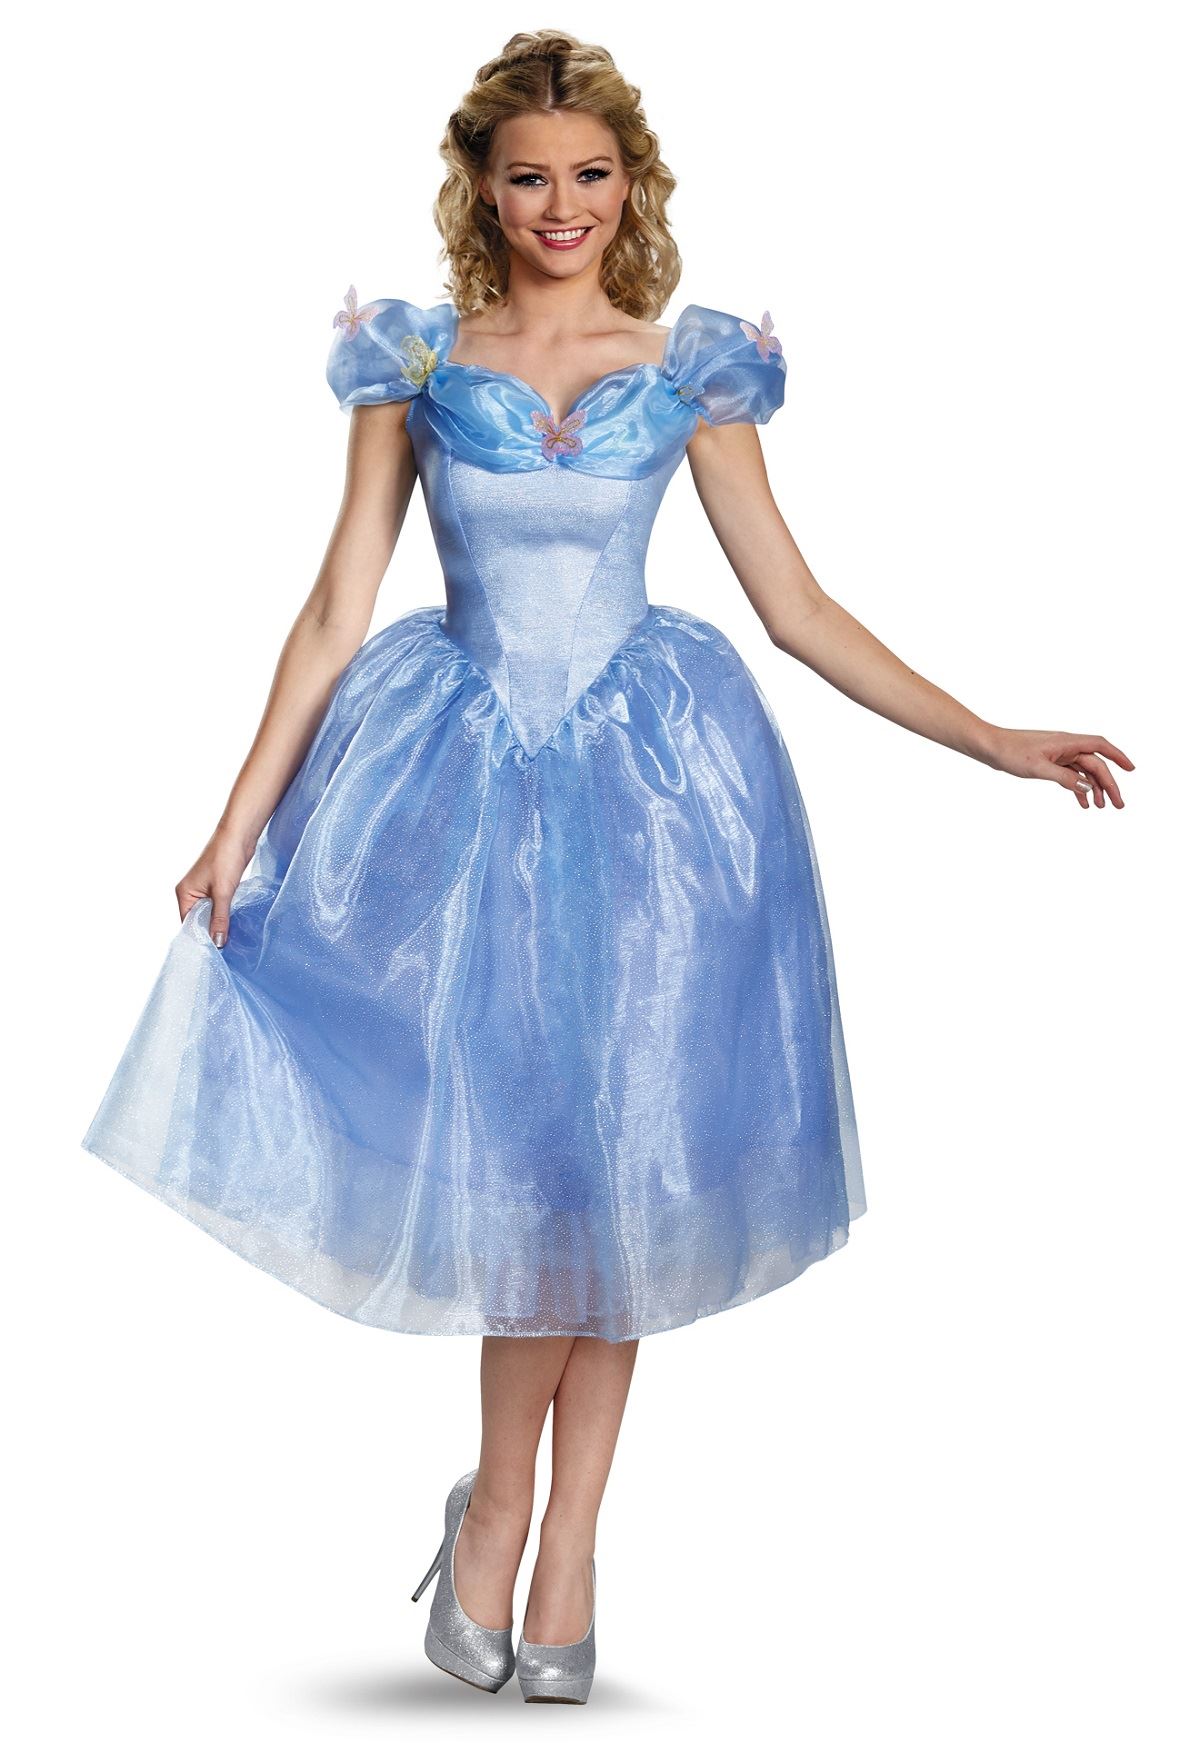 Adult Cinderella Disney Princess Women Costume 56 99 The Costume Land